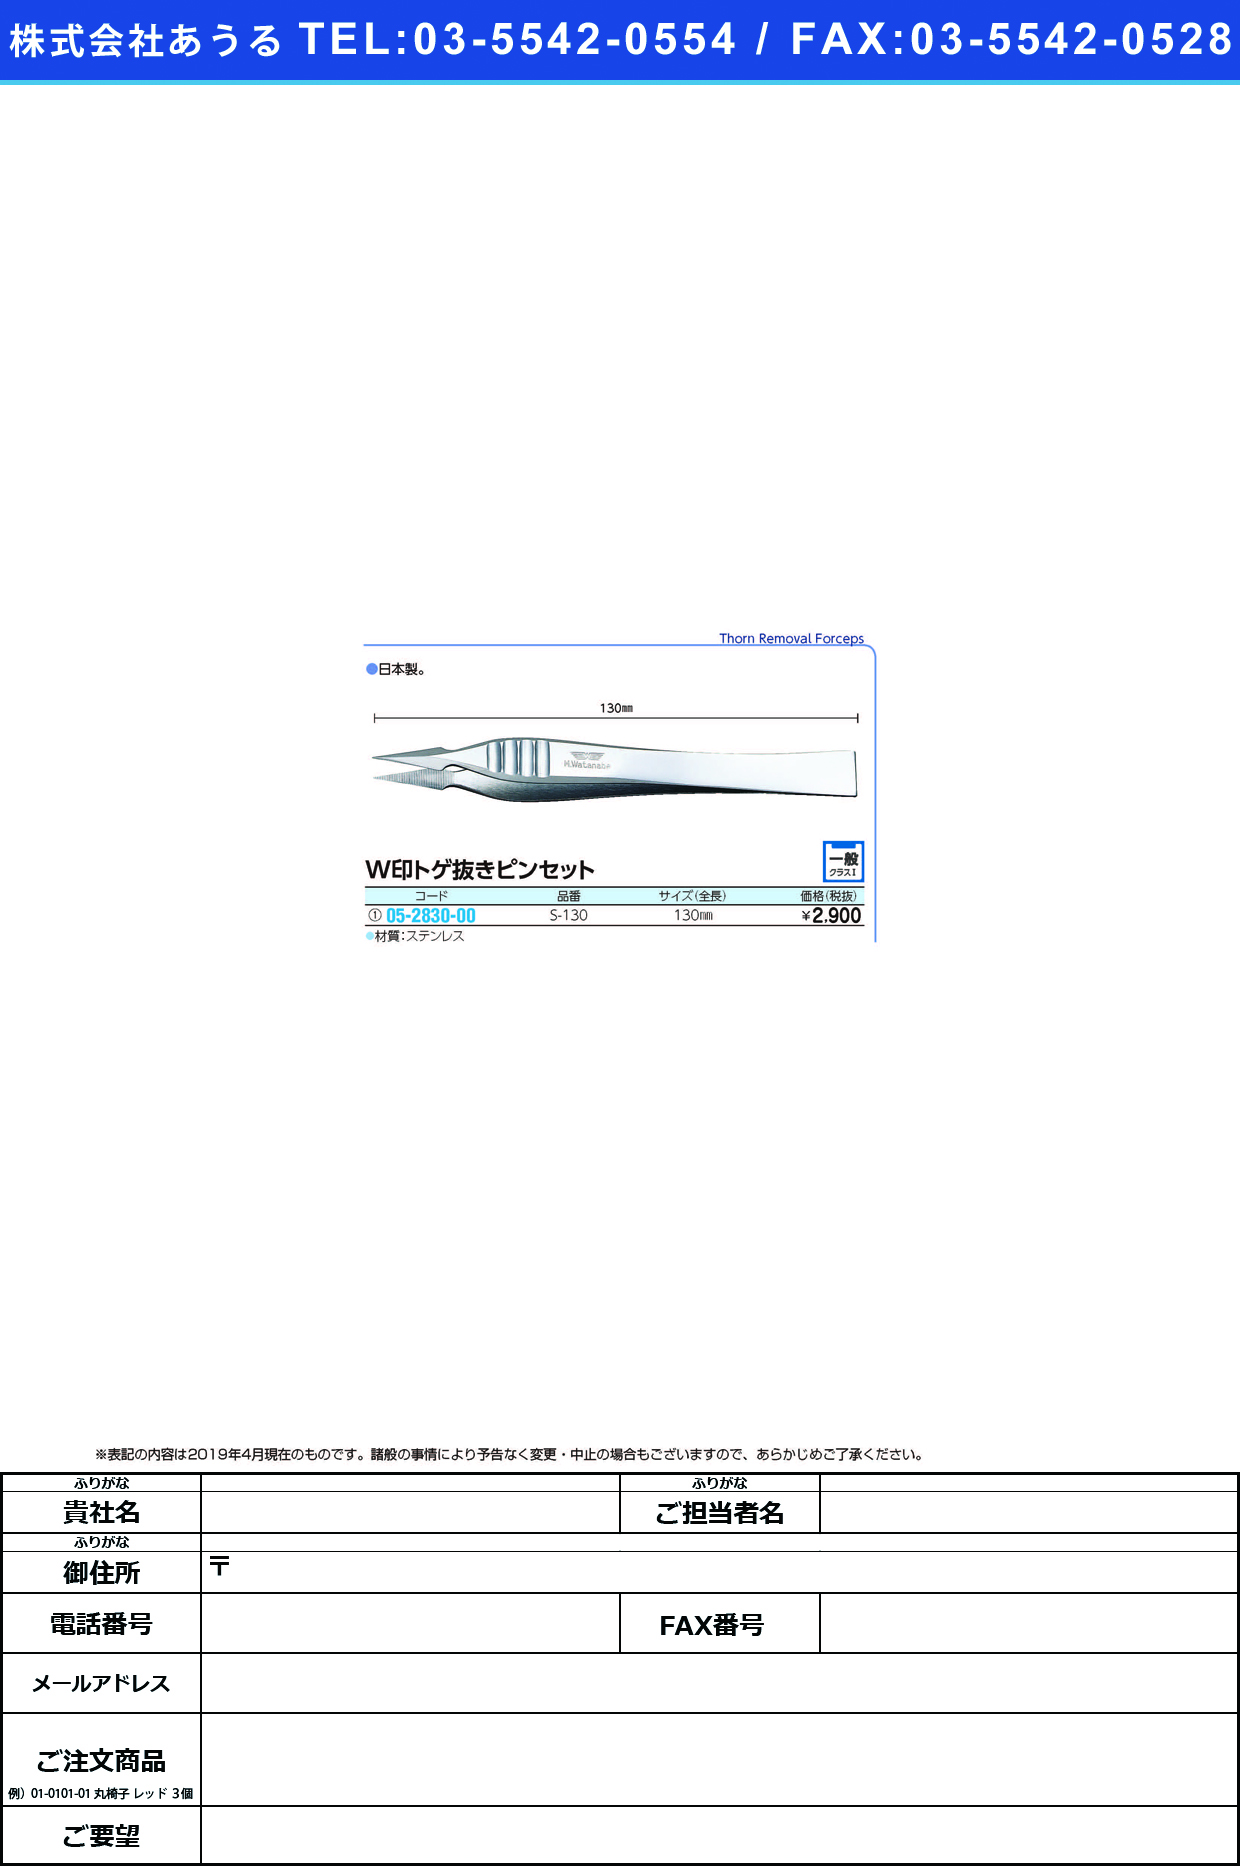 (05-2830-00)Ｗ印トゲ抜きピンセット S-130(ｽﾃﾝﾚｽ)130MM Wﾄｹﾞﾇｷﾋﾟﾝｾｯﾄ【1本単位】【2019年カタログ商品】